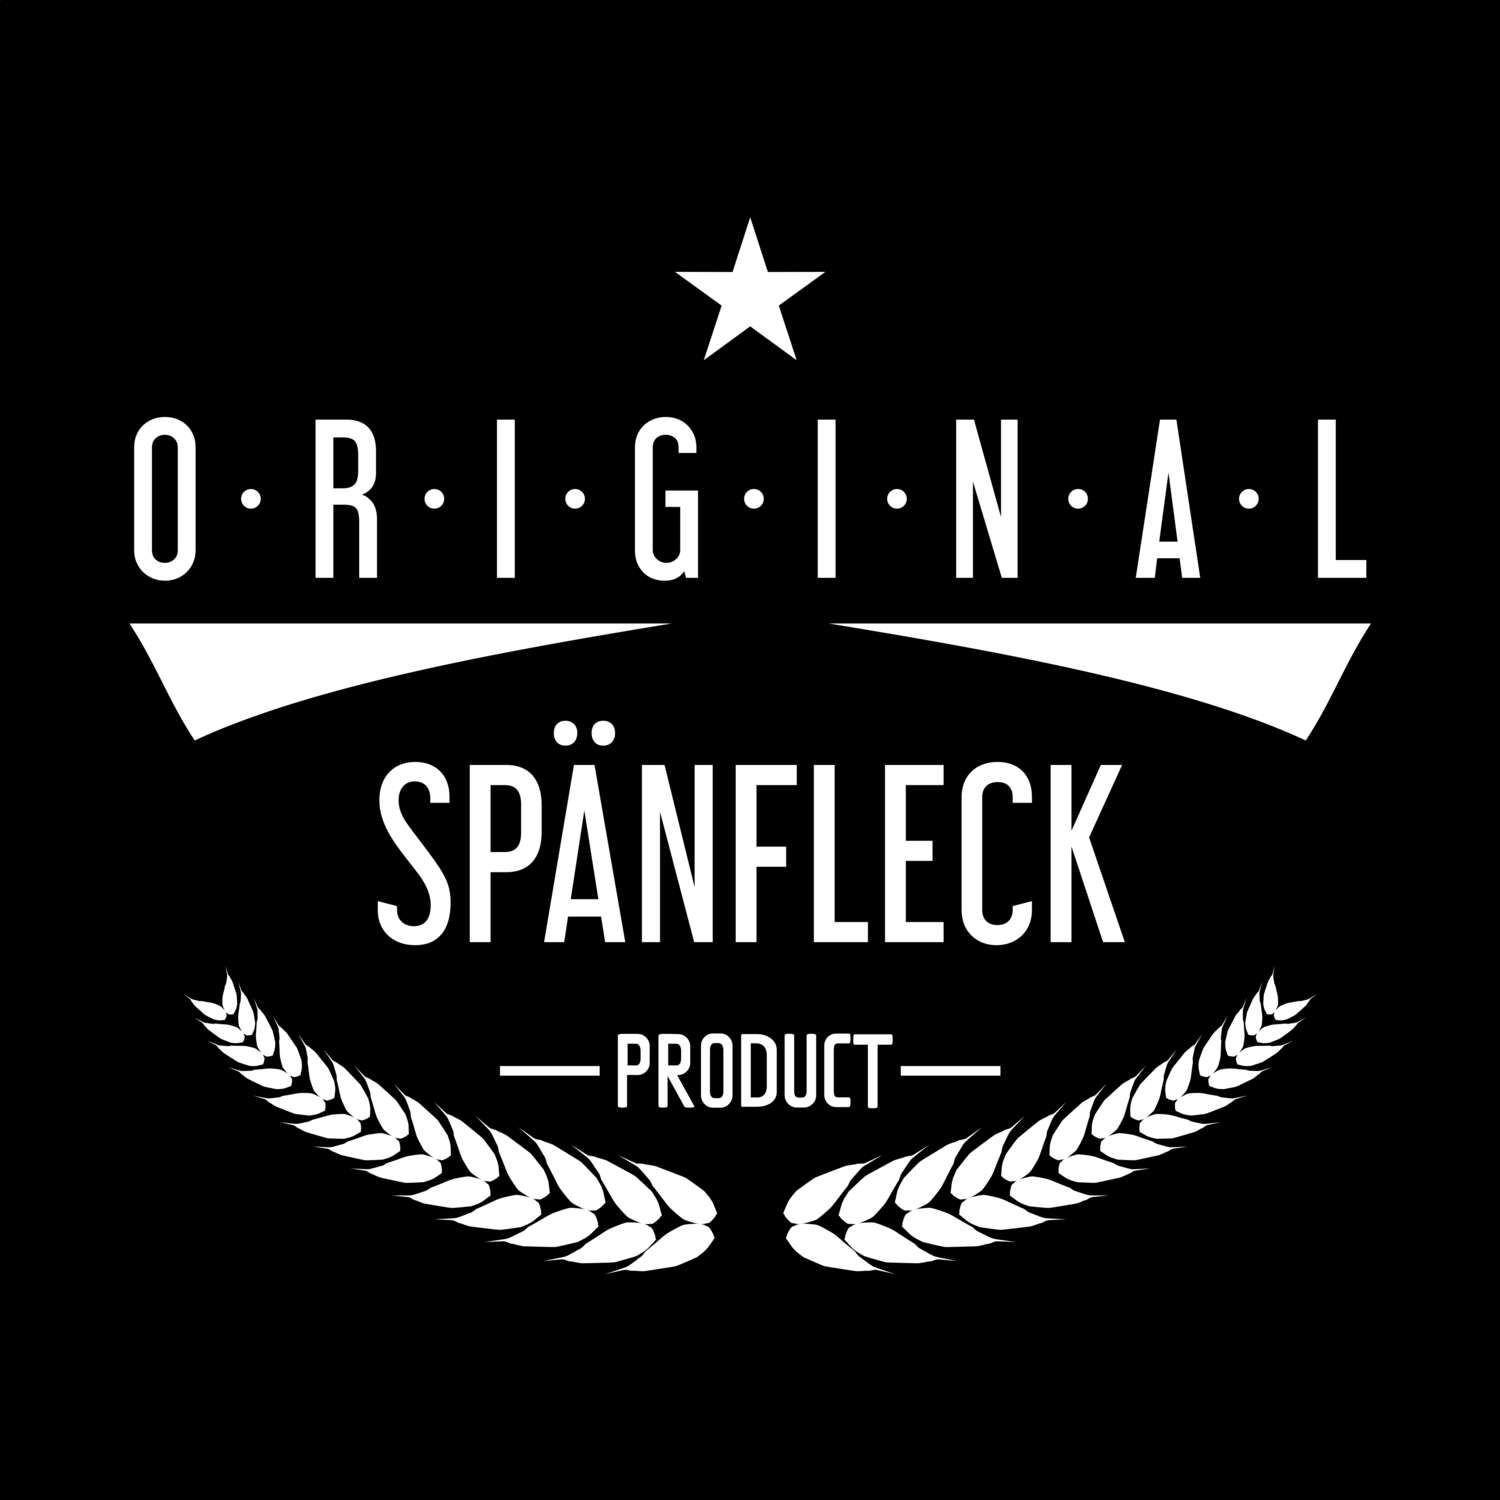 Spänfleck T-Shirt »Original Product«